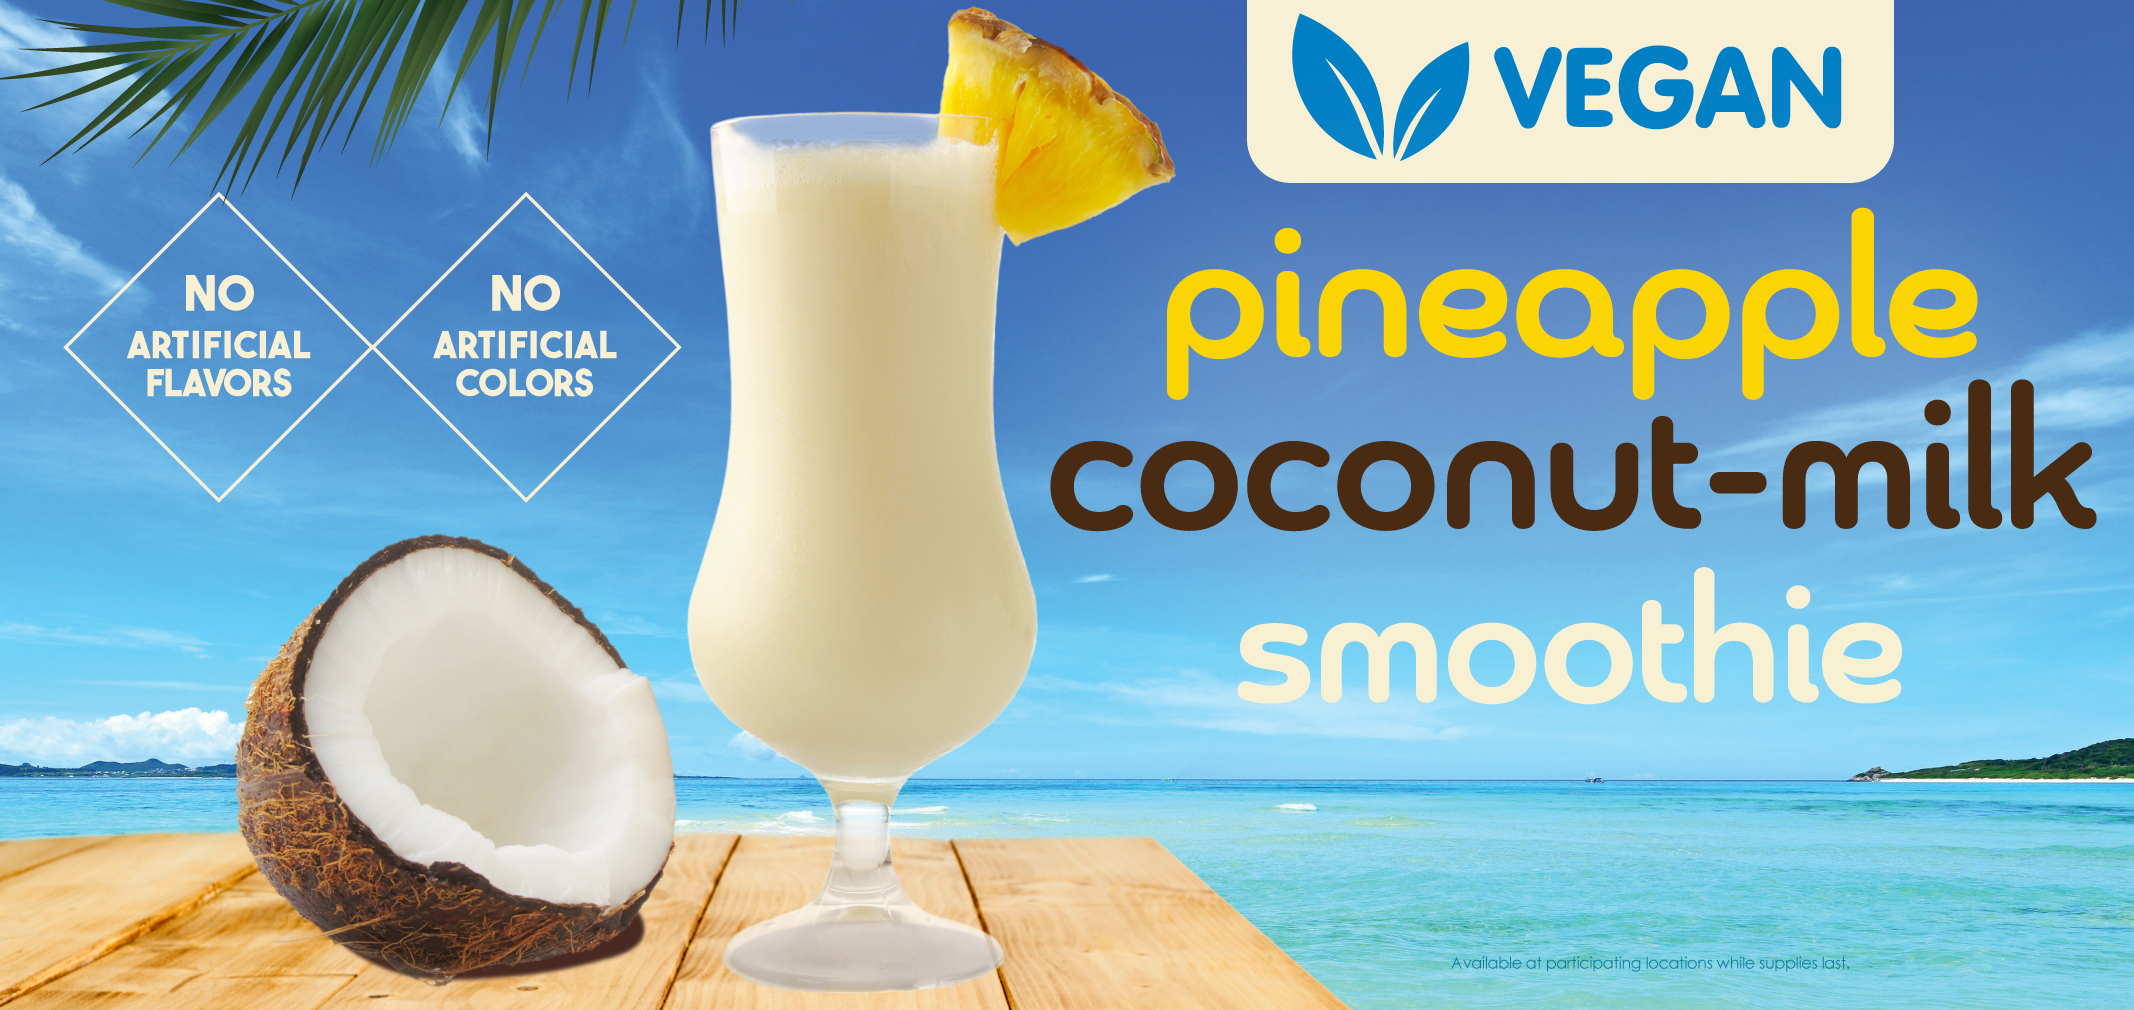 Vegan Pineapple Coconut-Milk Smoothie label image